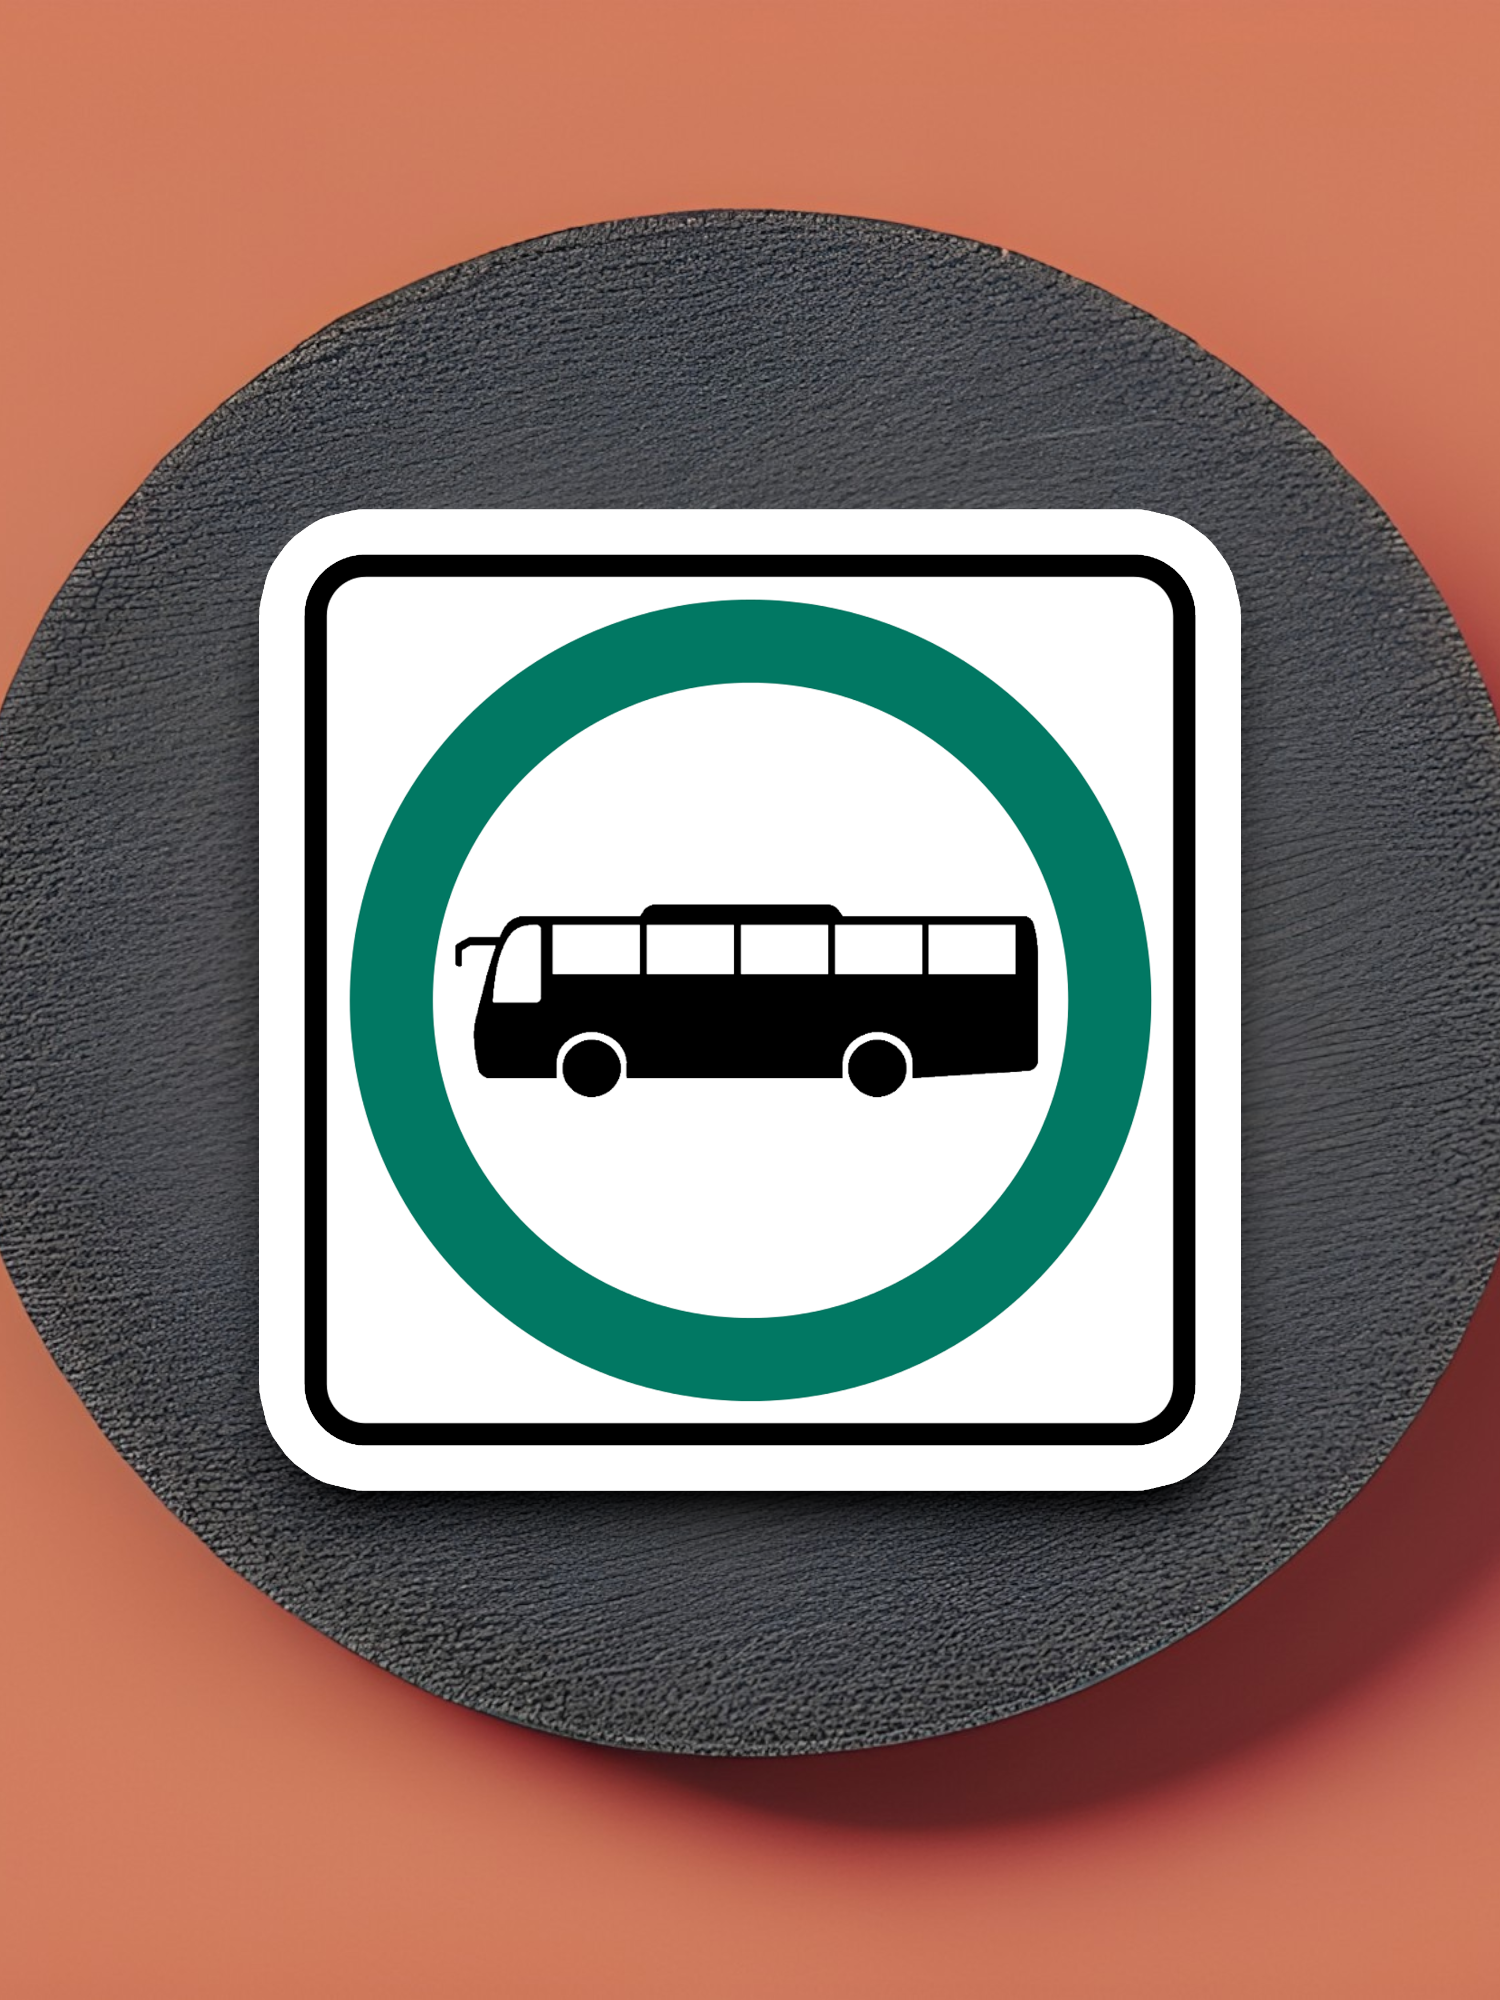 Bus Road Sign Sticker